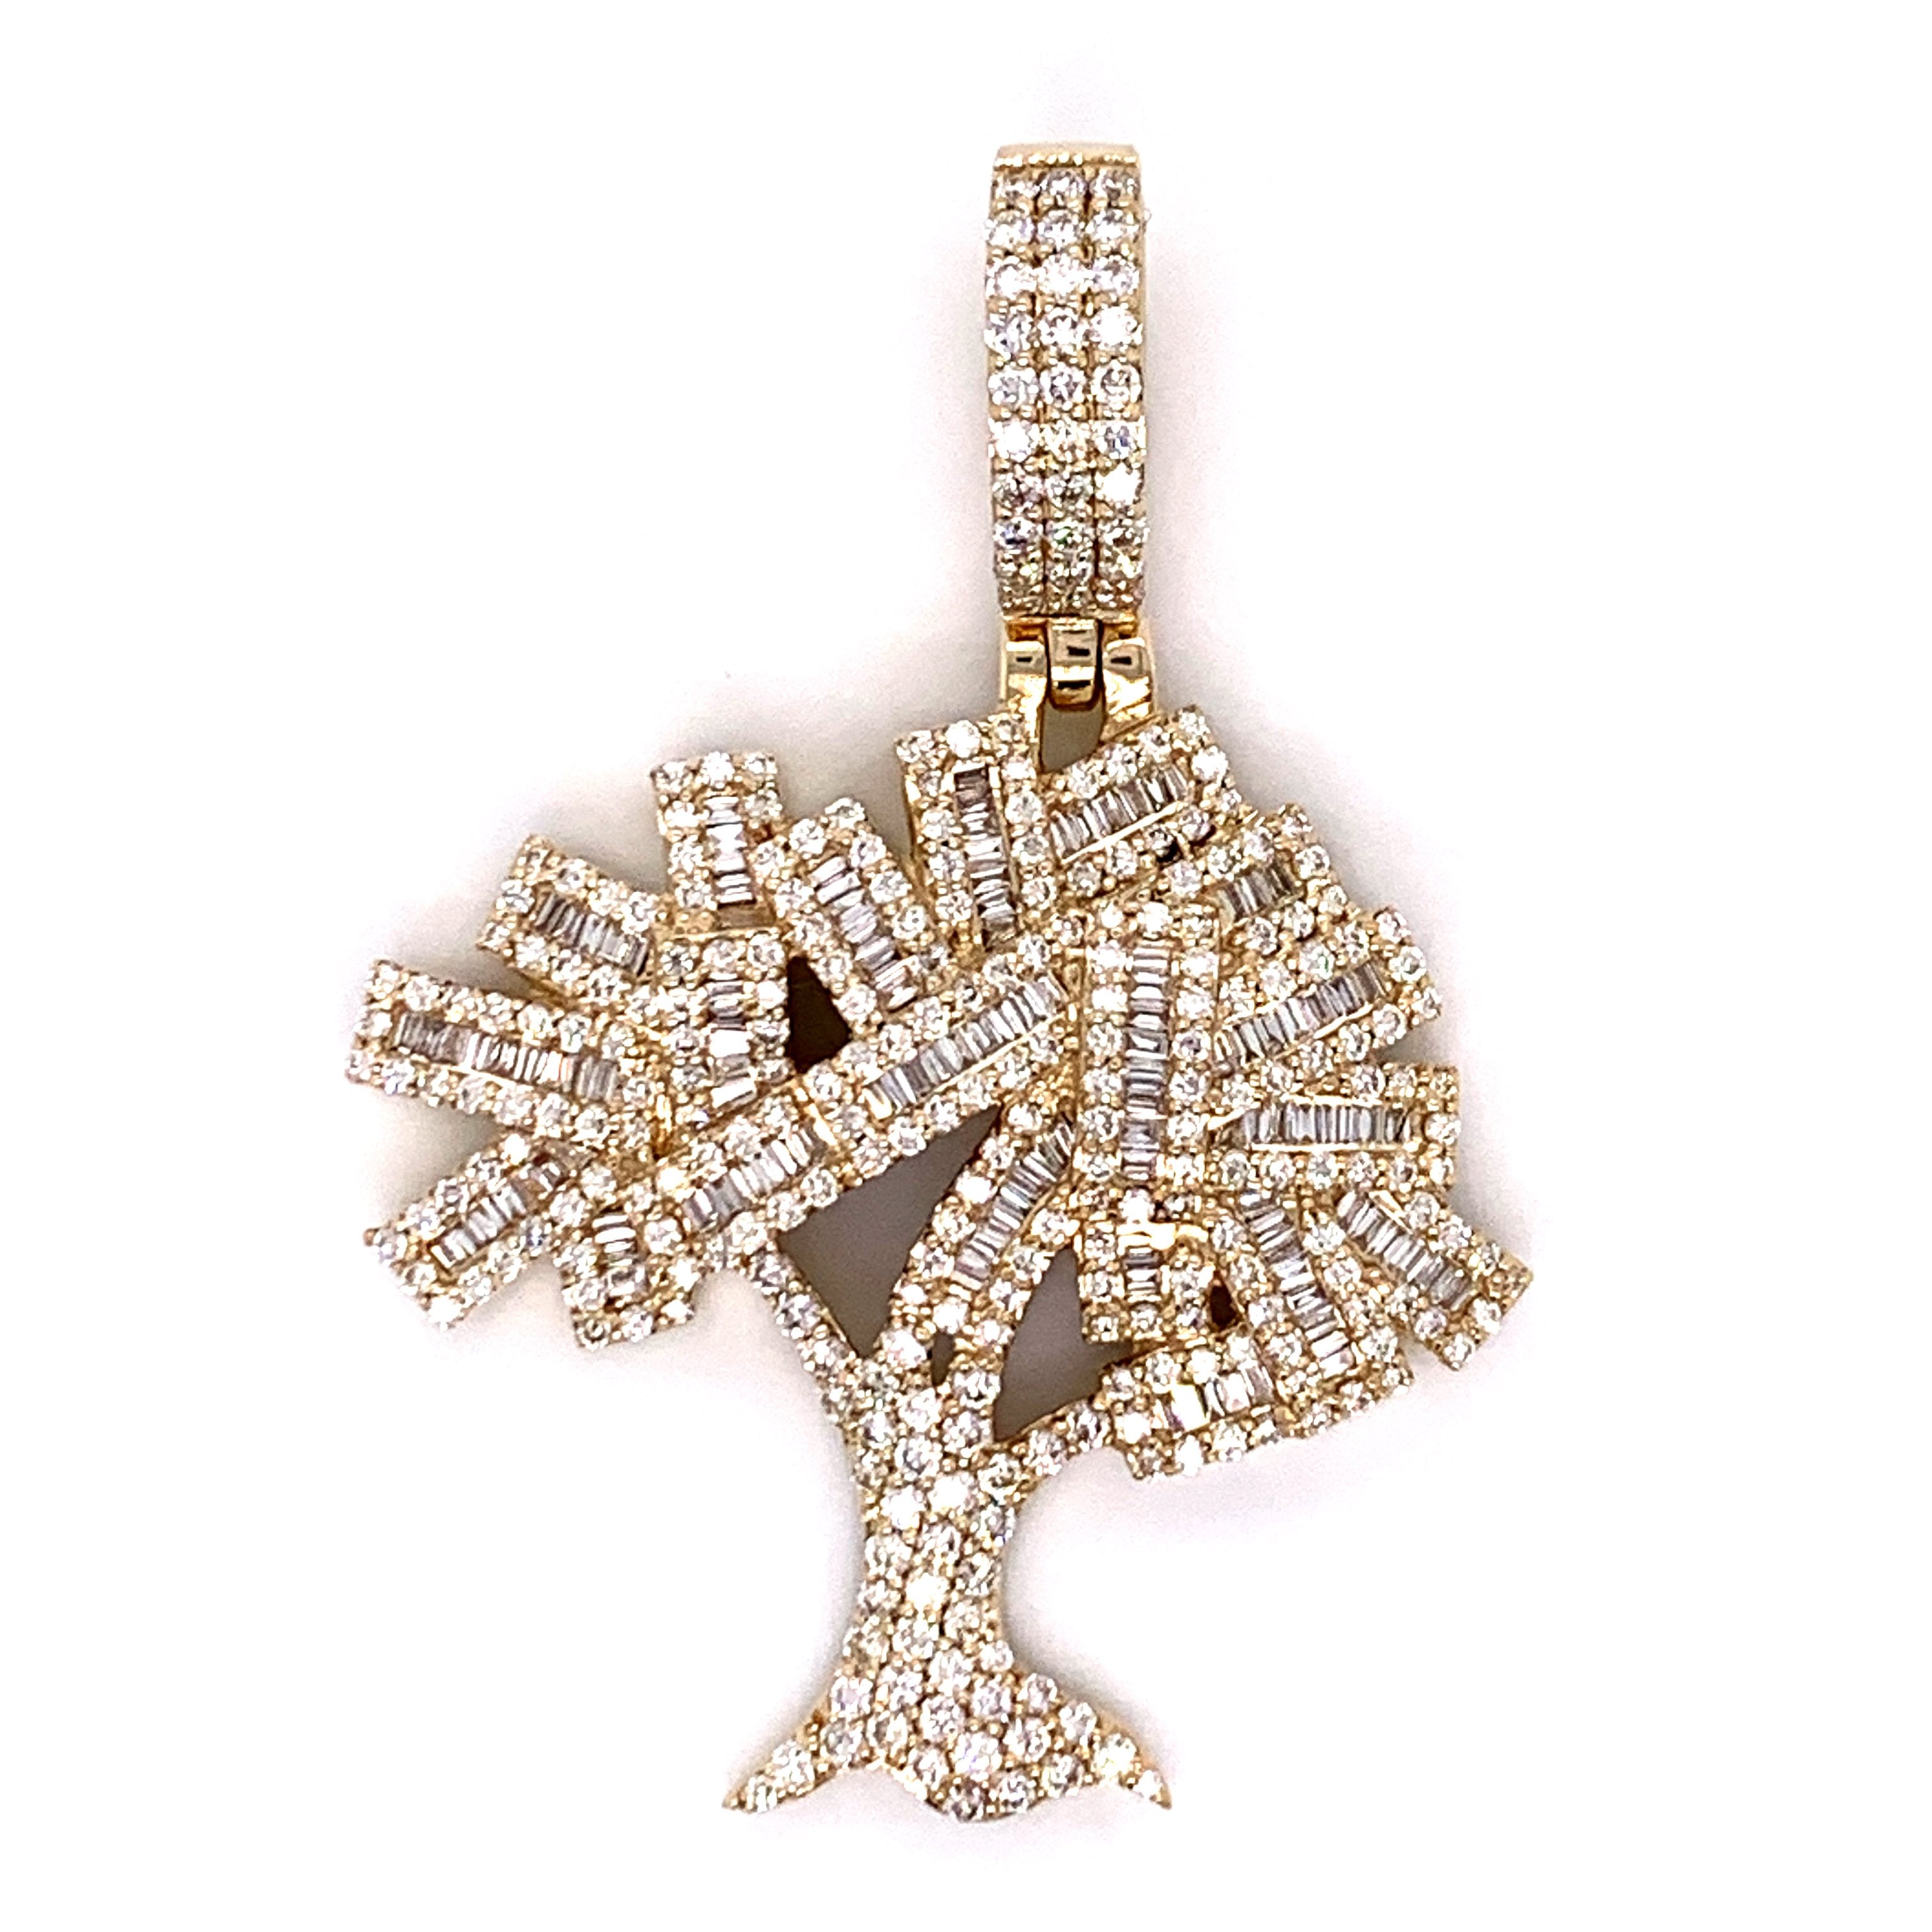 2.75 CT. Diamond Money Tree Pendant in 10K Gold - White Carat Diamonds 